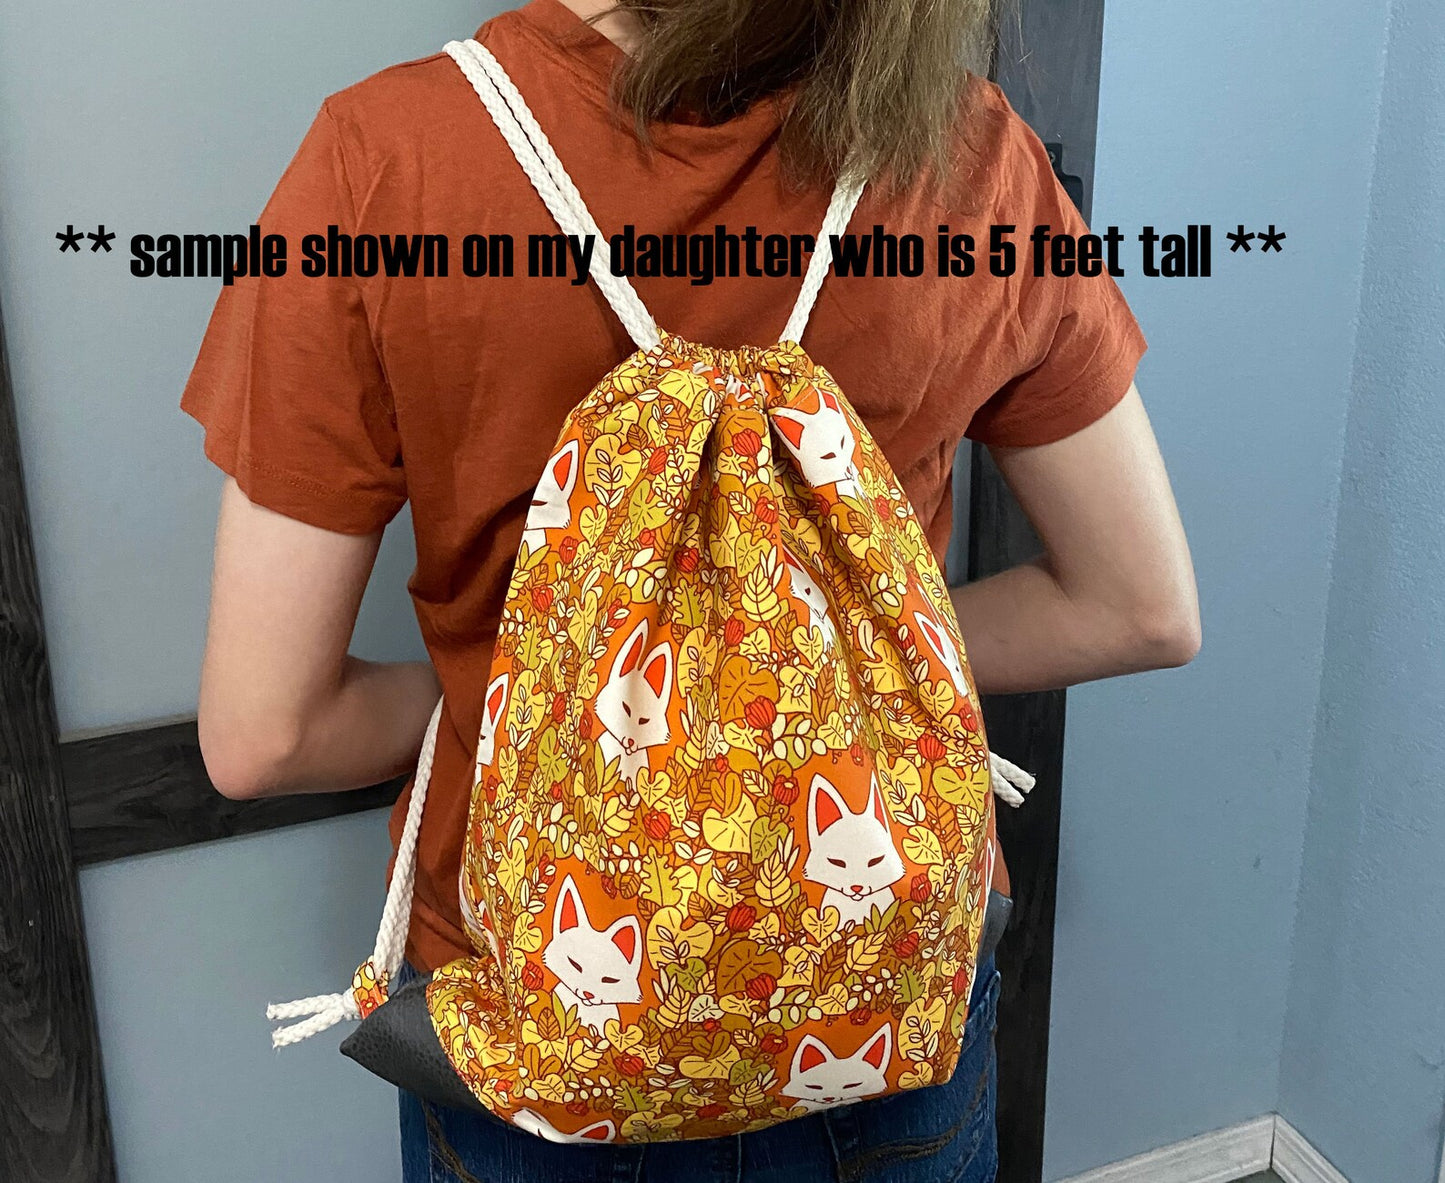 Dragon Drawstring Bag - Handmade Drawstring Bag – Drawstring Backpack - On the Go Bag - Overnight Bag